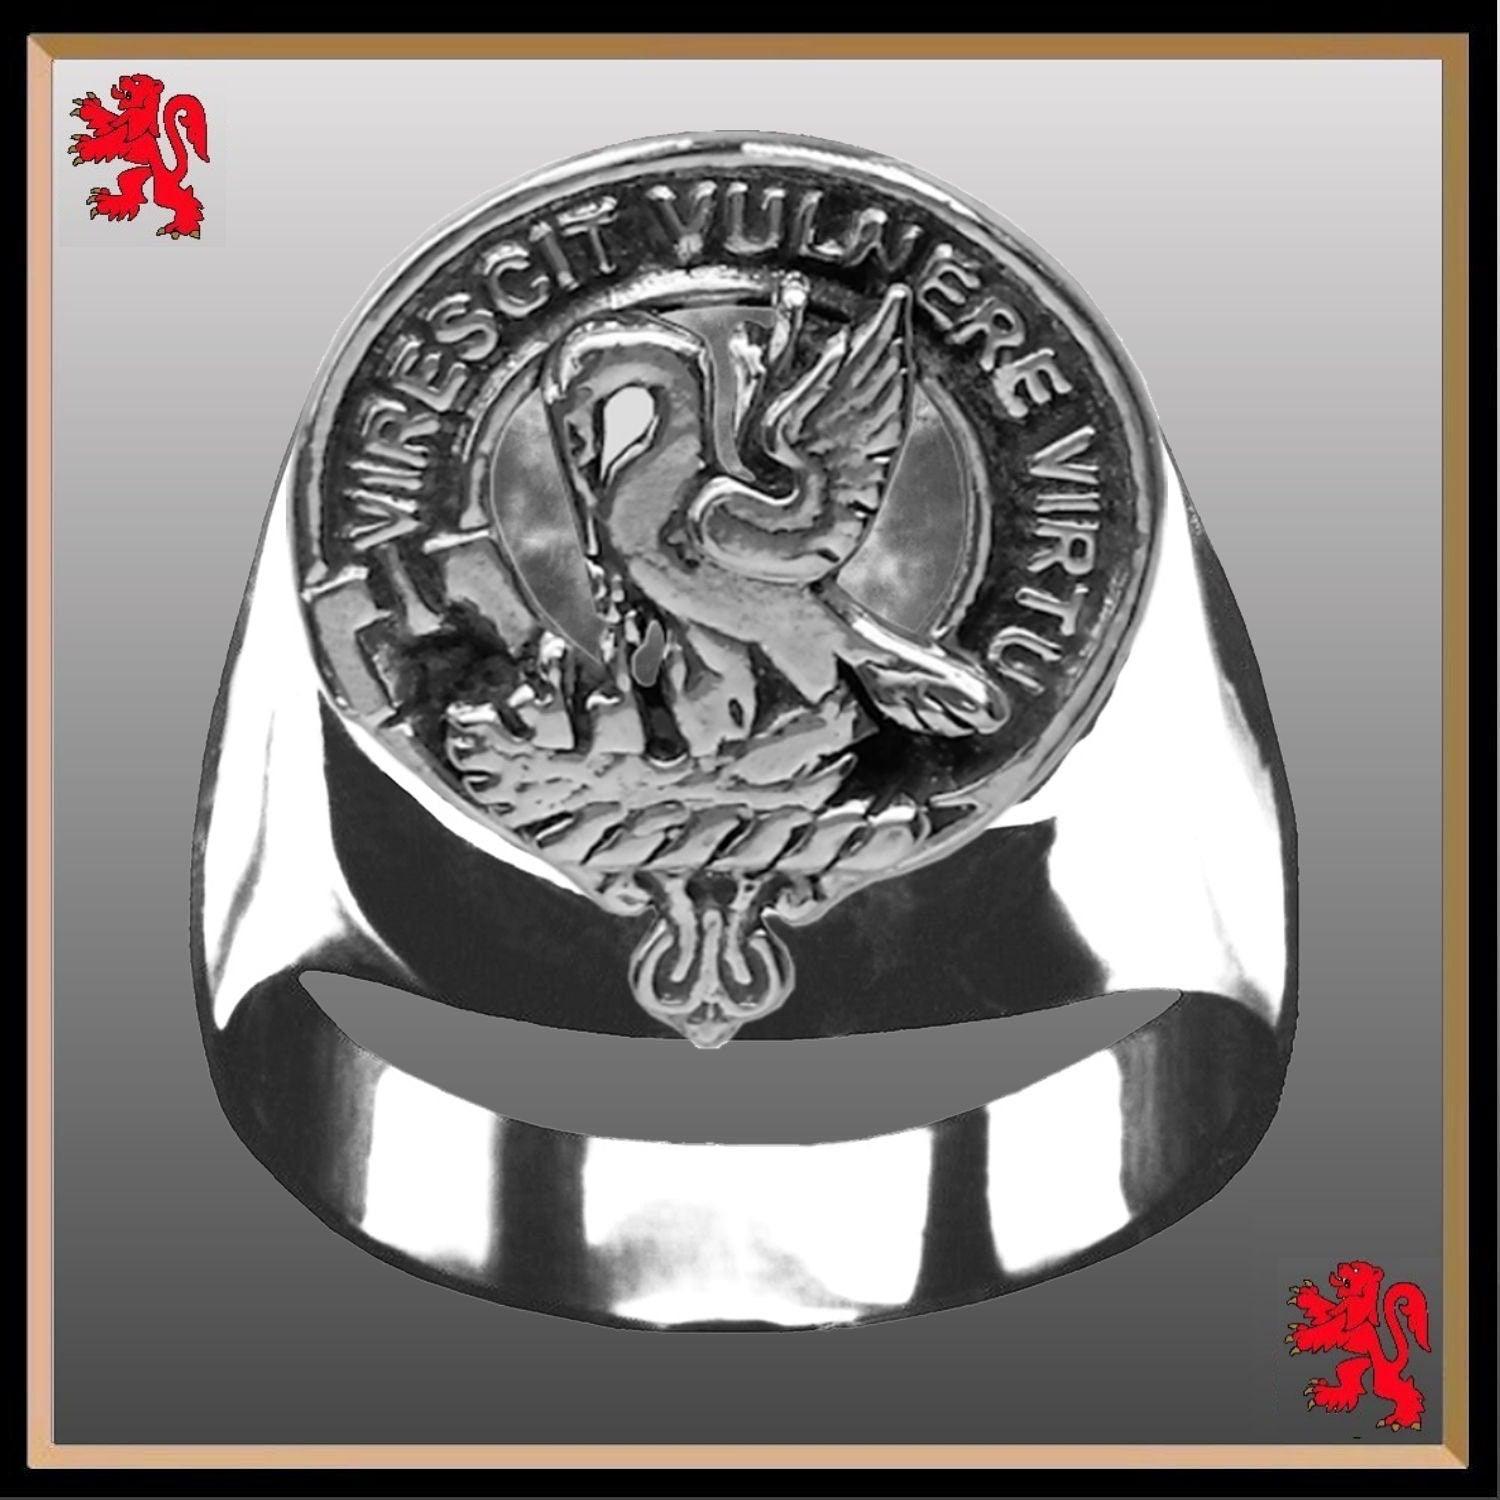 Stewart Scottish Clan Crest Ring GC100  ~  Sterling Silver and Karat Gold